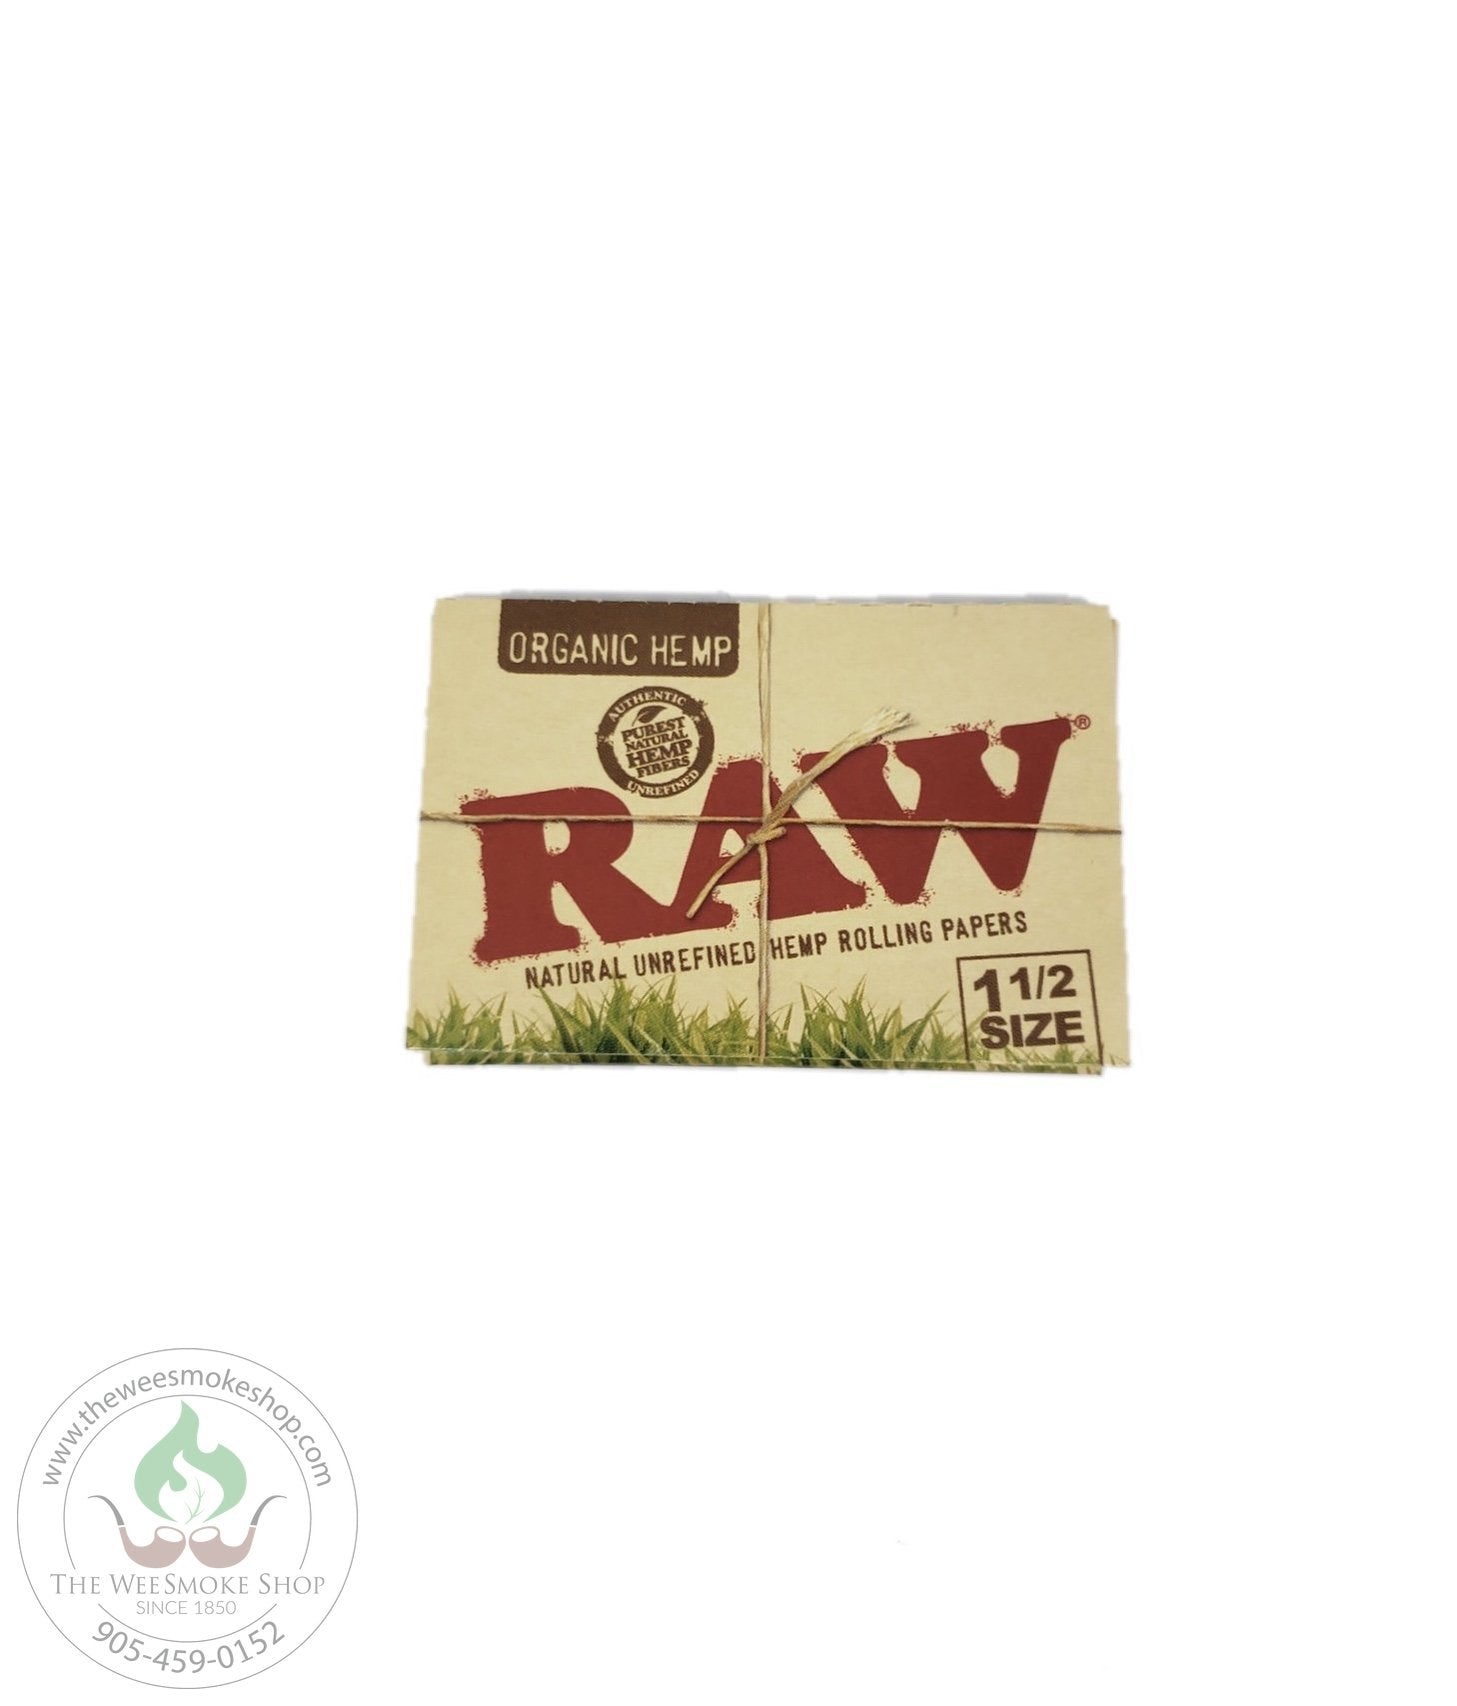 RAW Organic Hemp Rolling Papers. size 1 1/2.